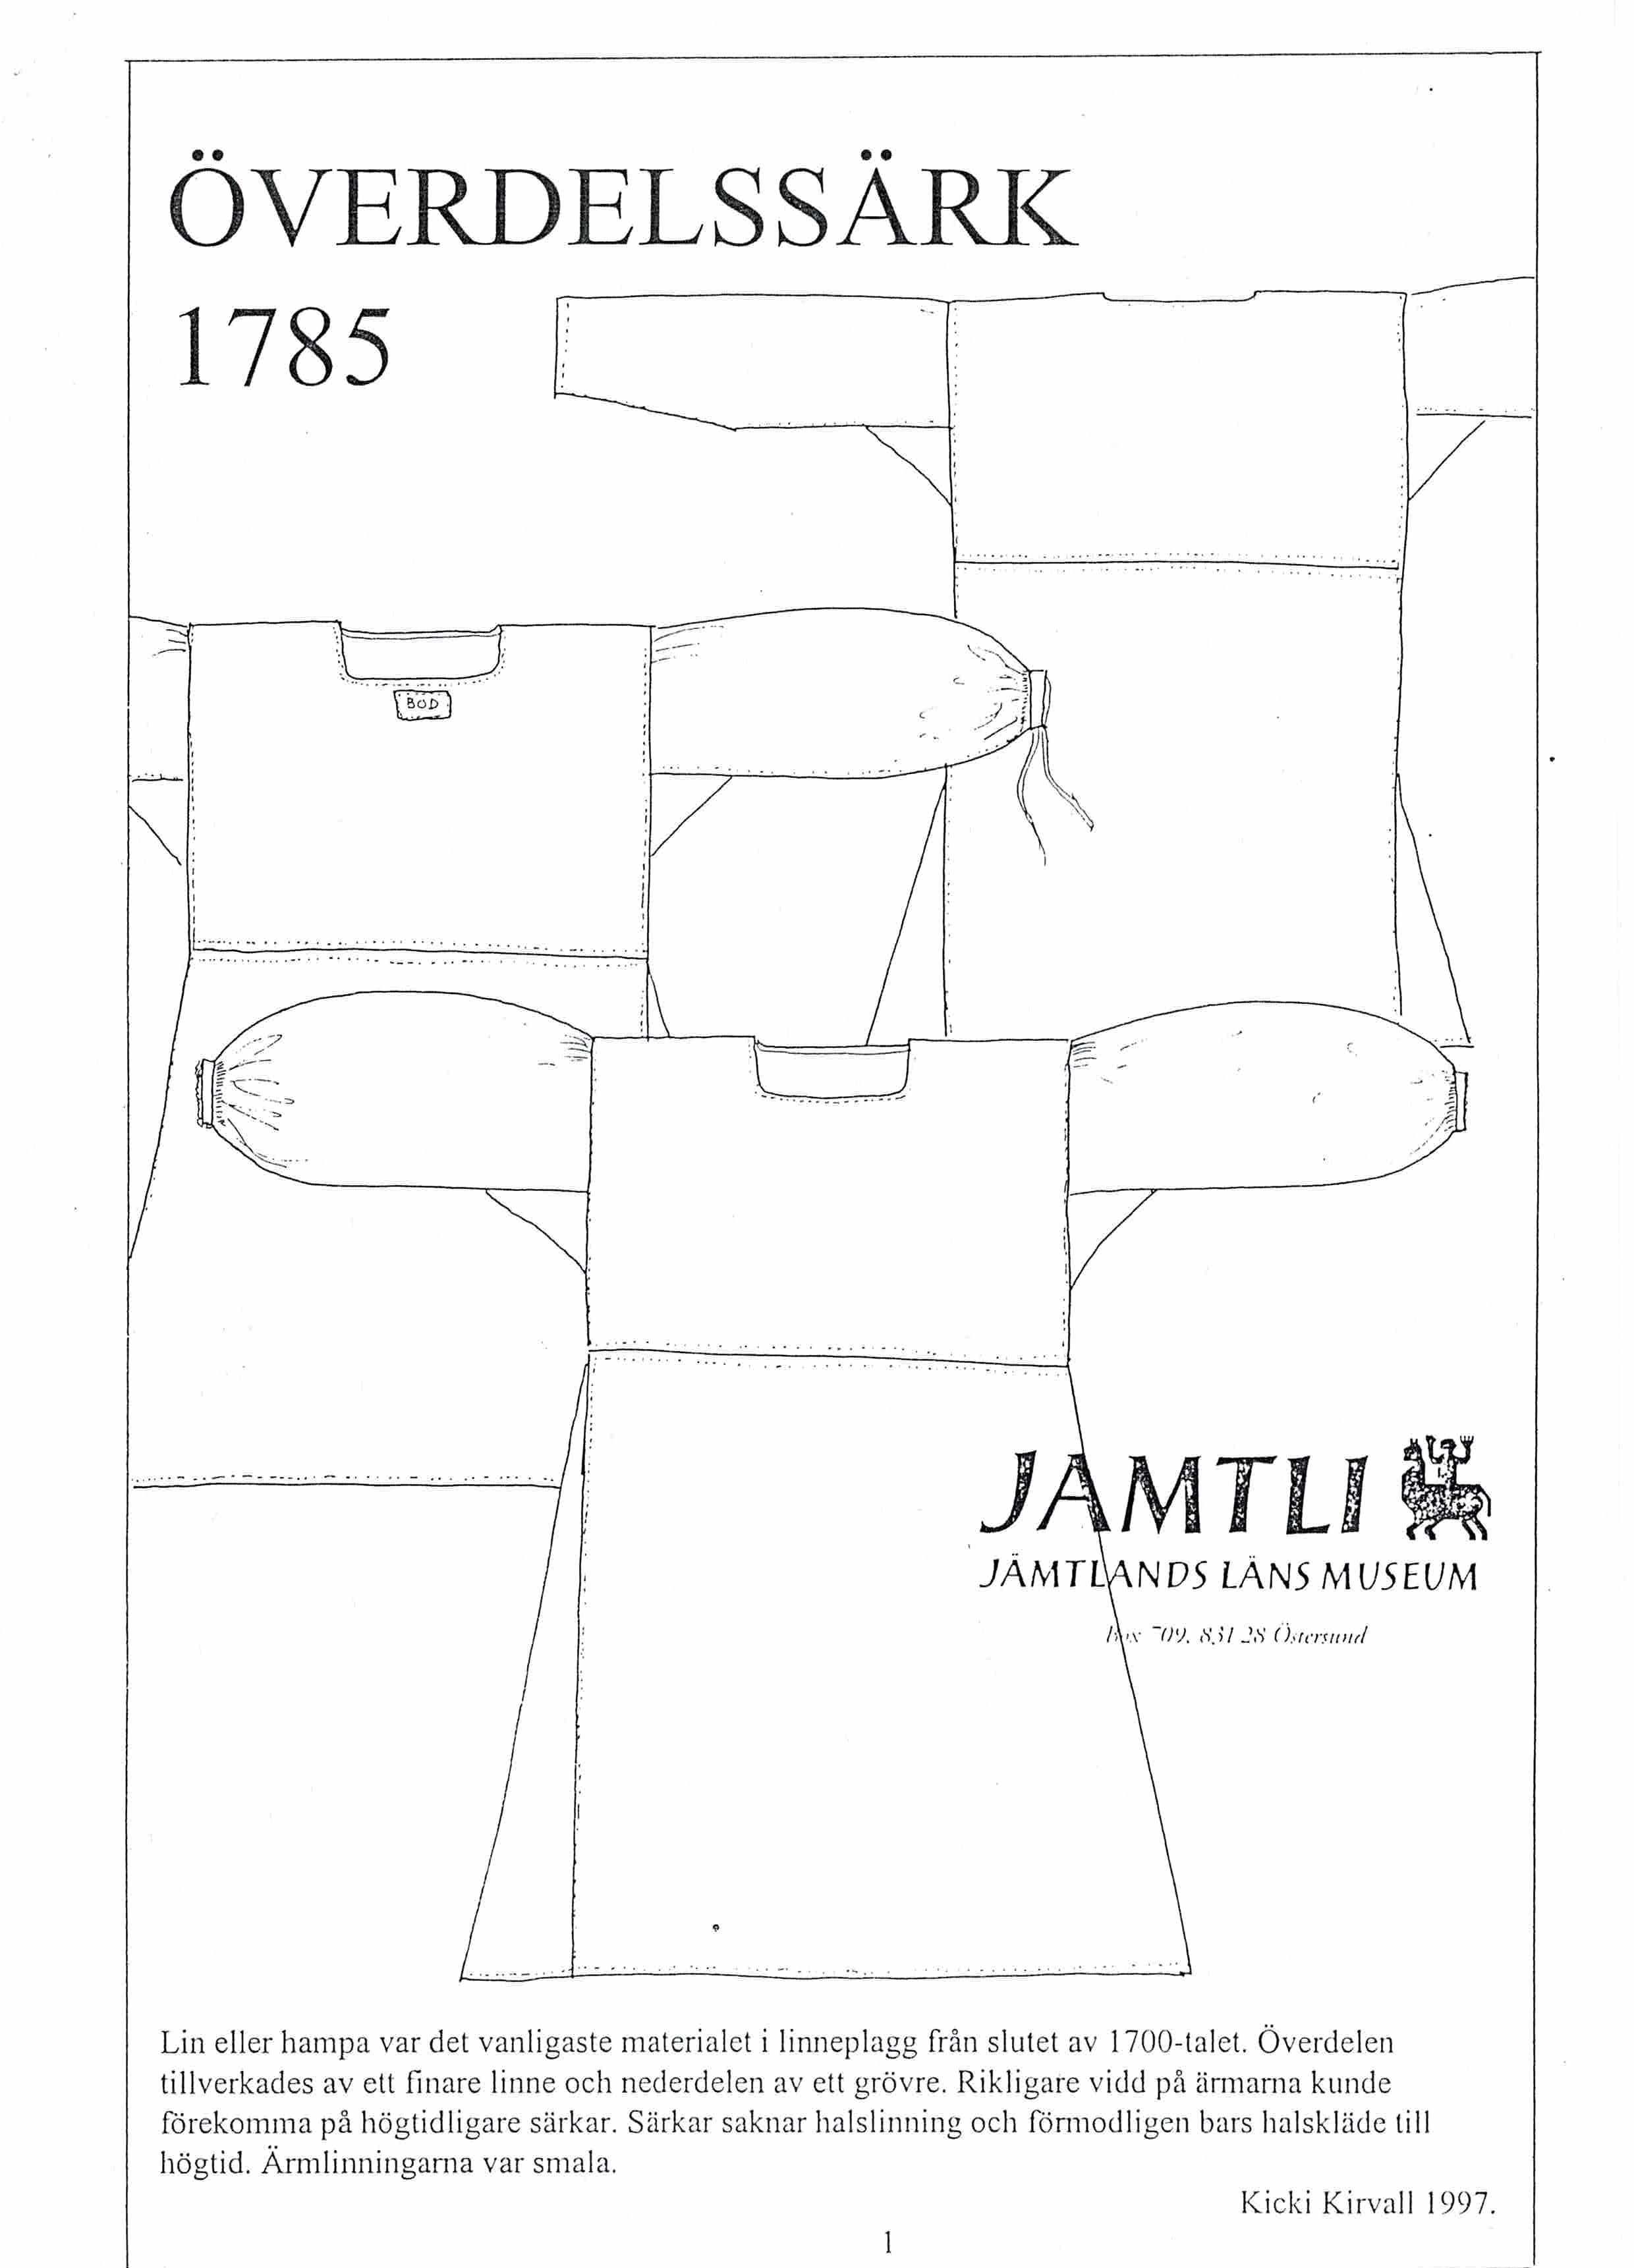 Sewing booklet Jamtli- Shift 1785